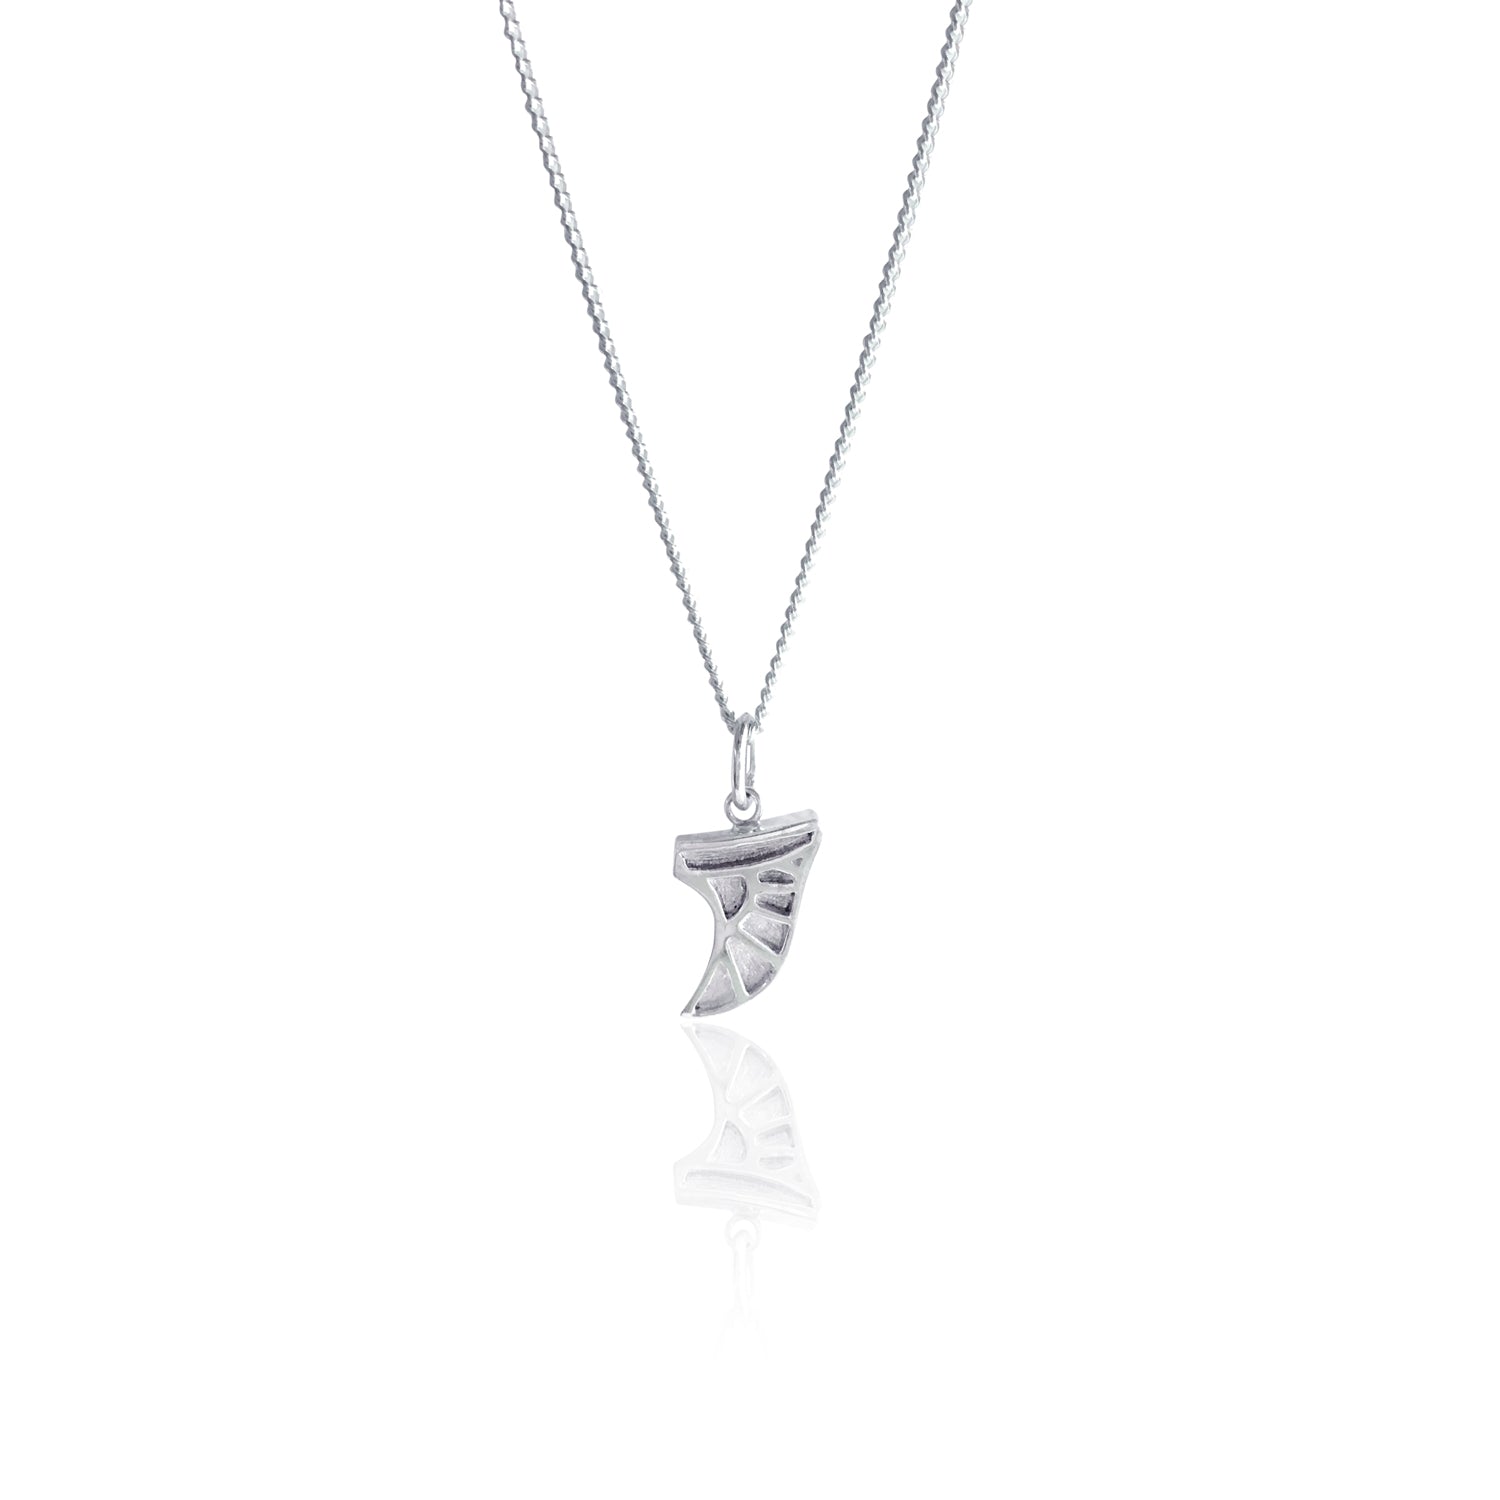 La Luna Rose Collaboration Necklace wit hGoldfish Kiss Blogger - Surf Fin Charm in Silver